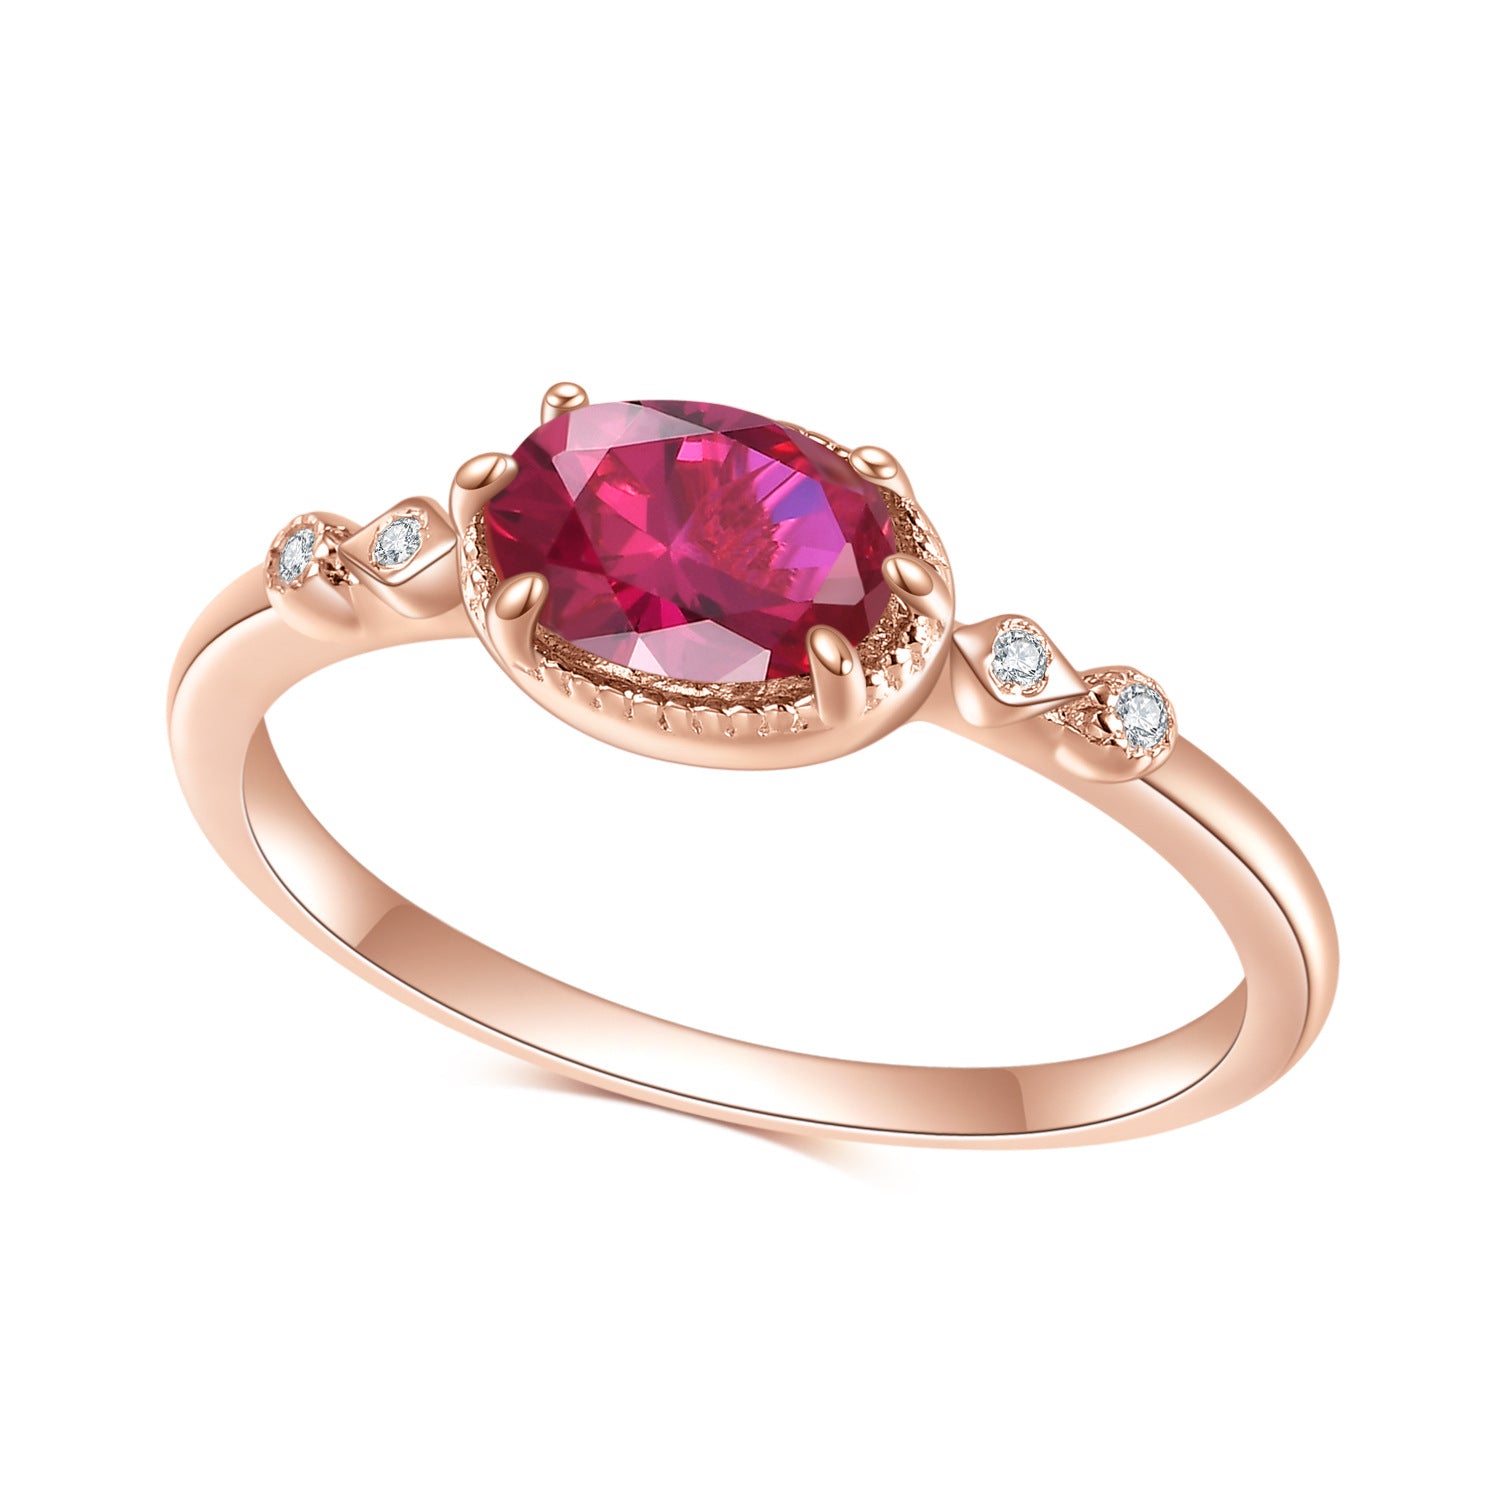 Luxury S925 Silver Inlaid Red Corundum Ring for Women